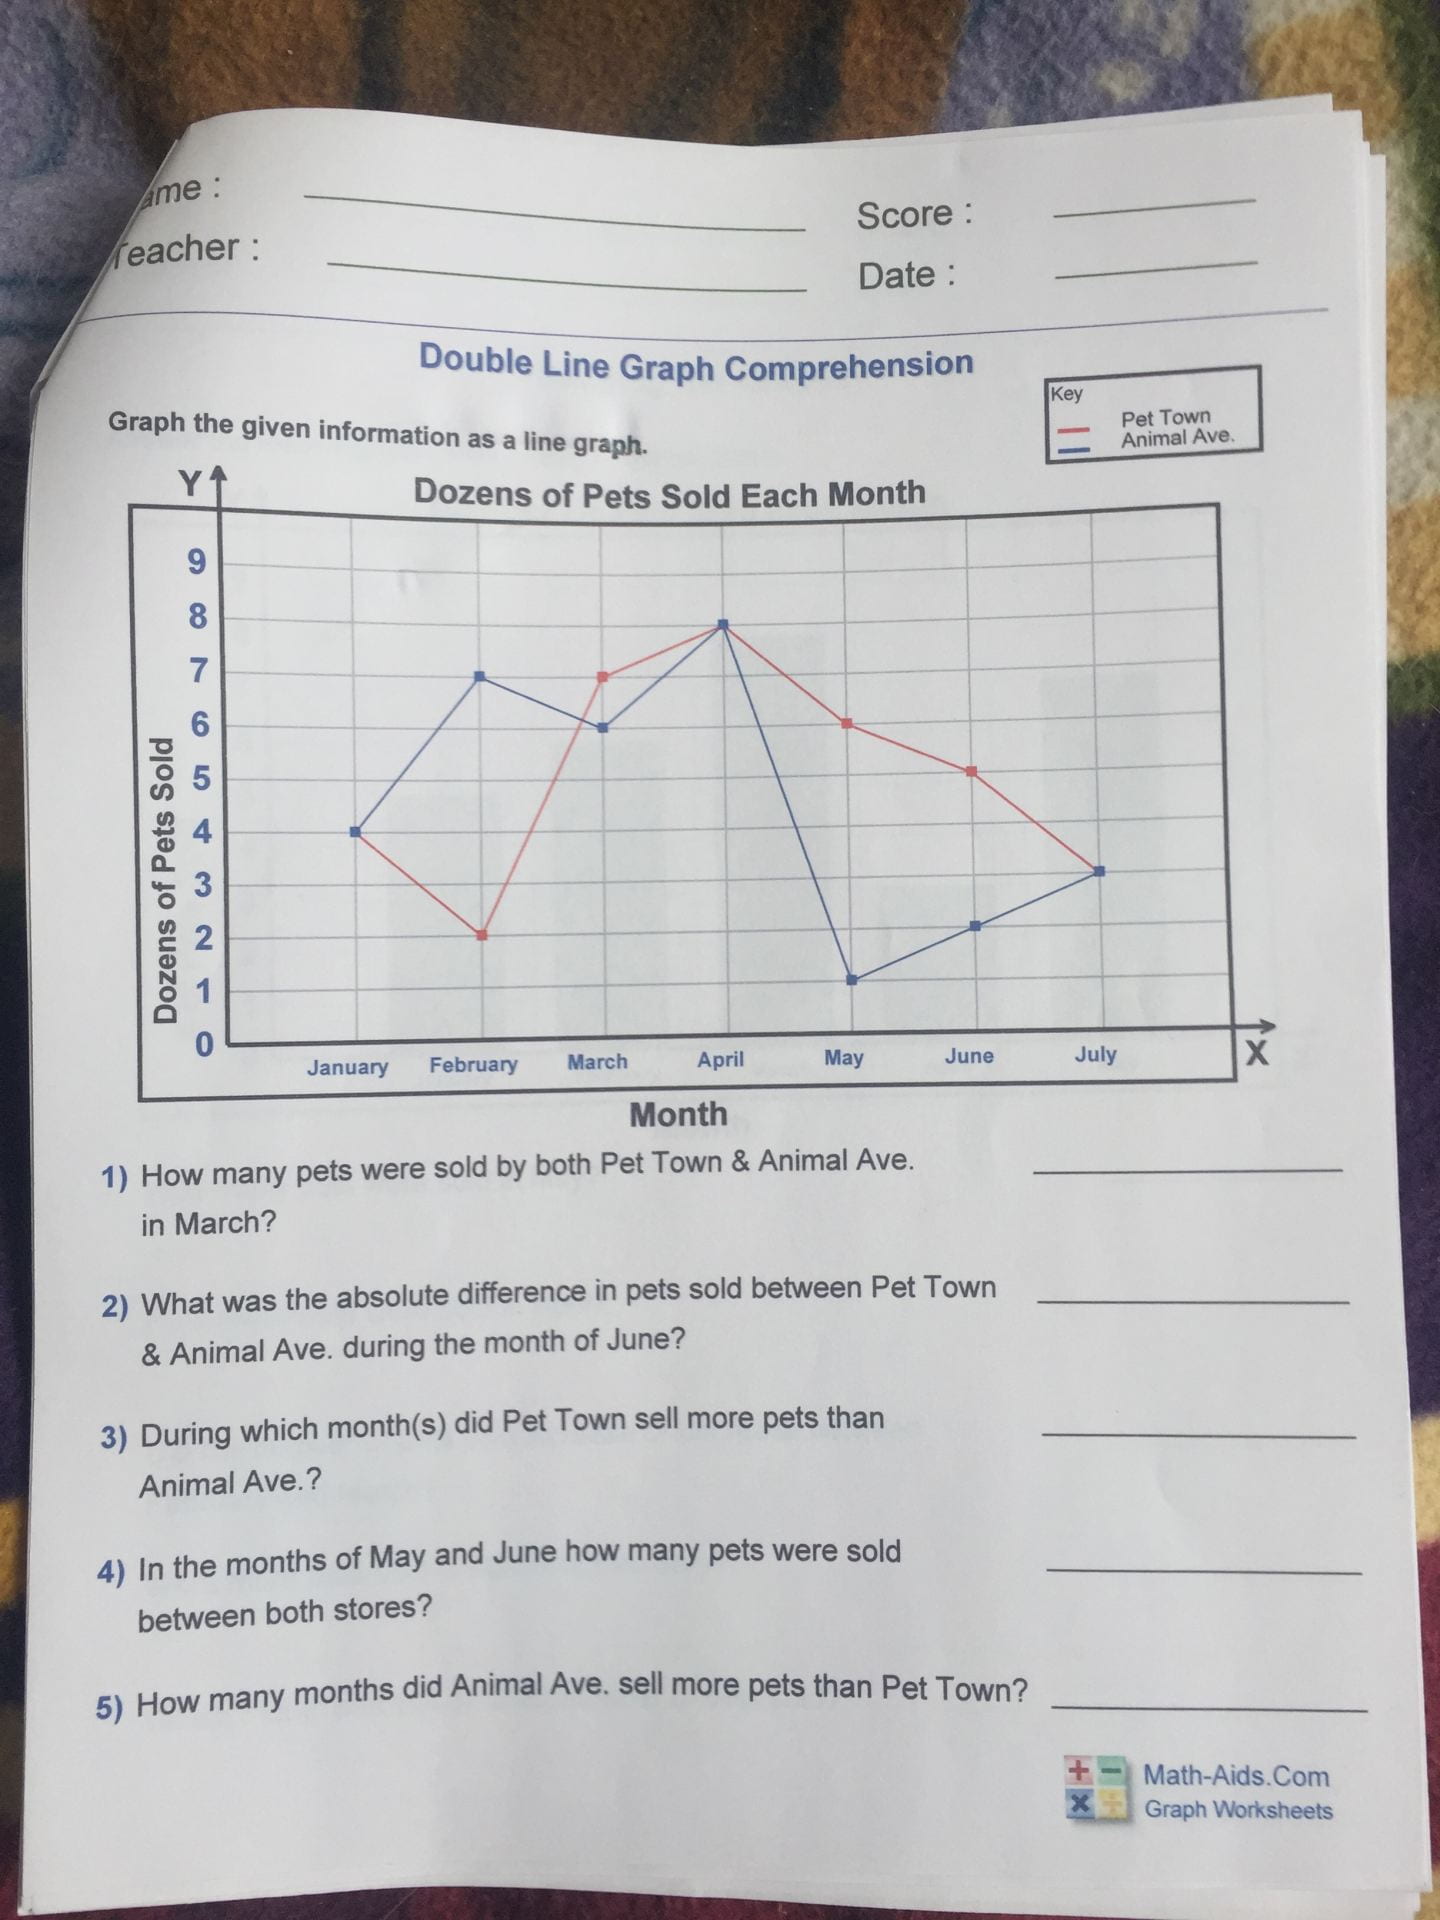 Double Line Graph Comprehension | Mr. Clark's Grade 6 Blog